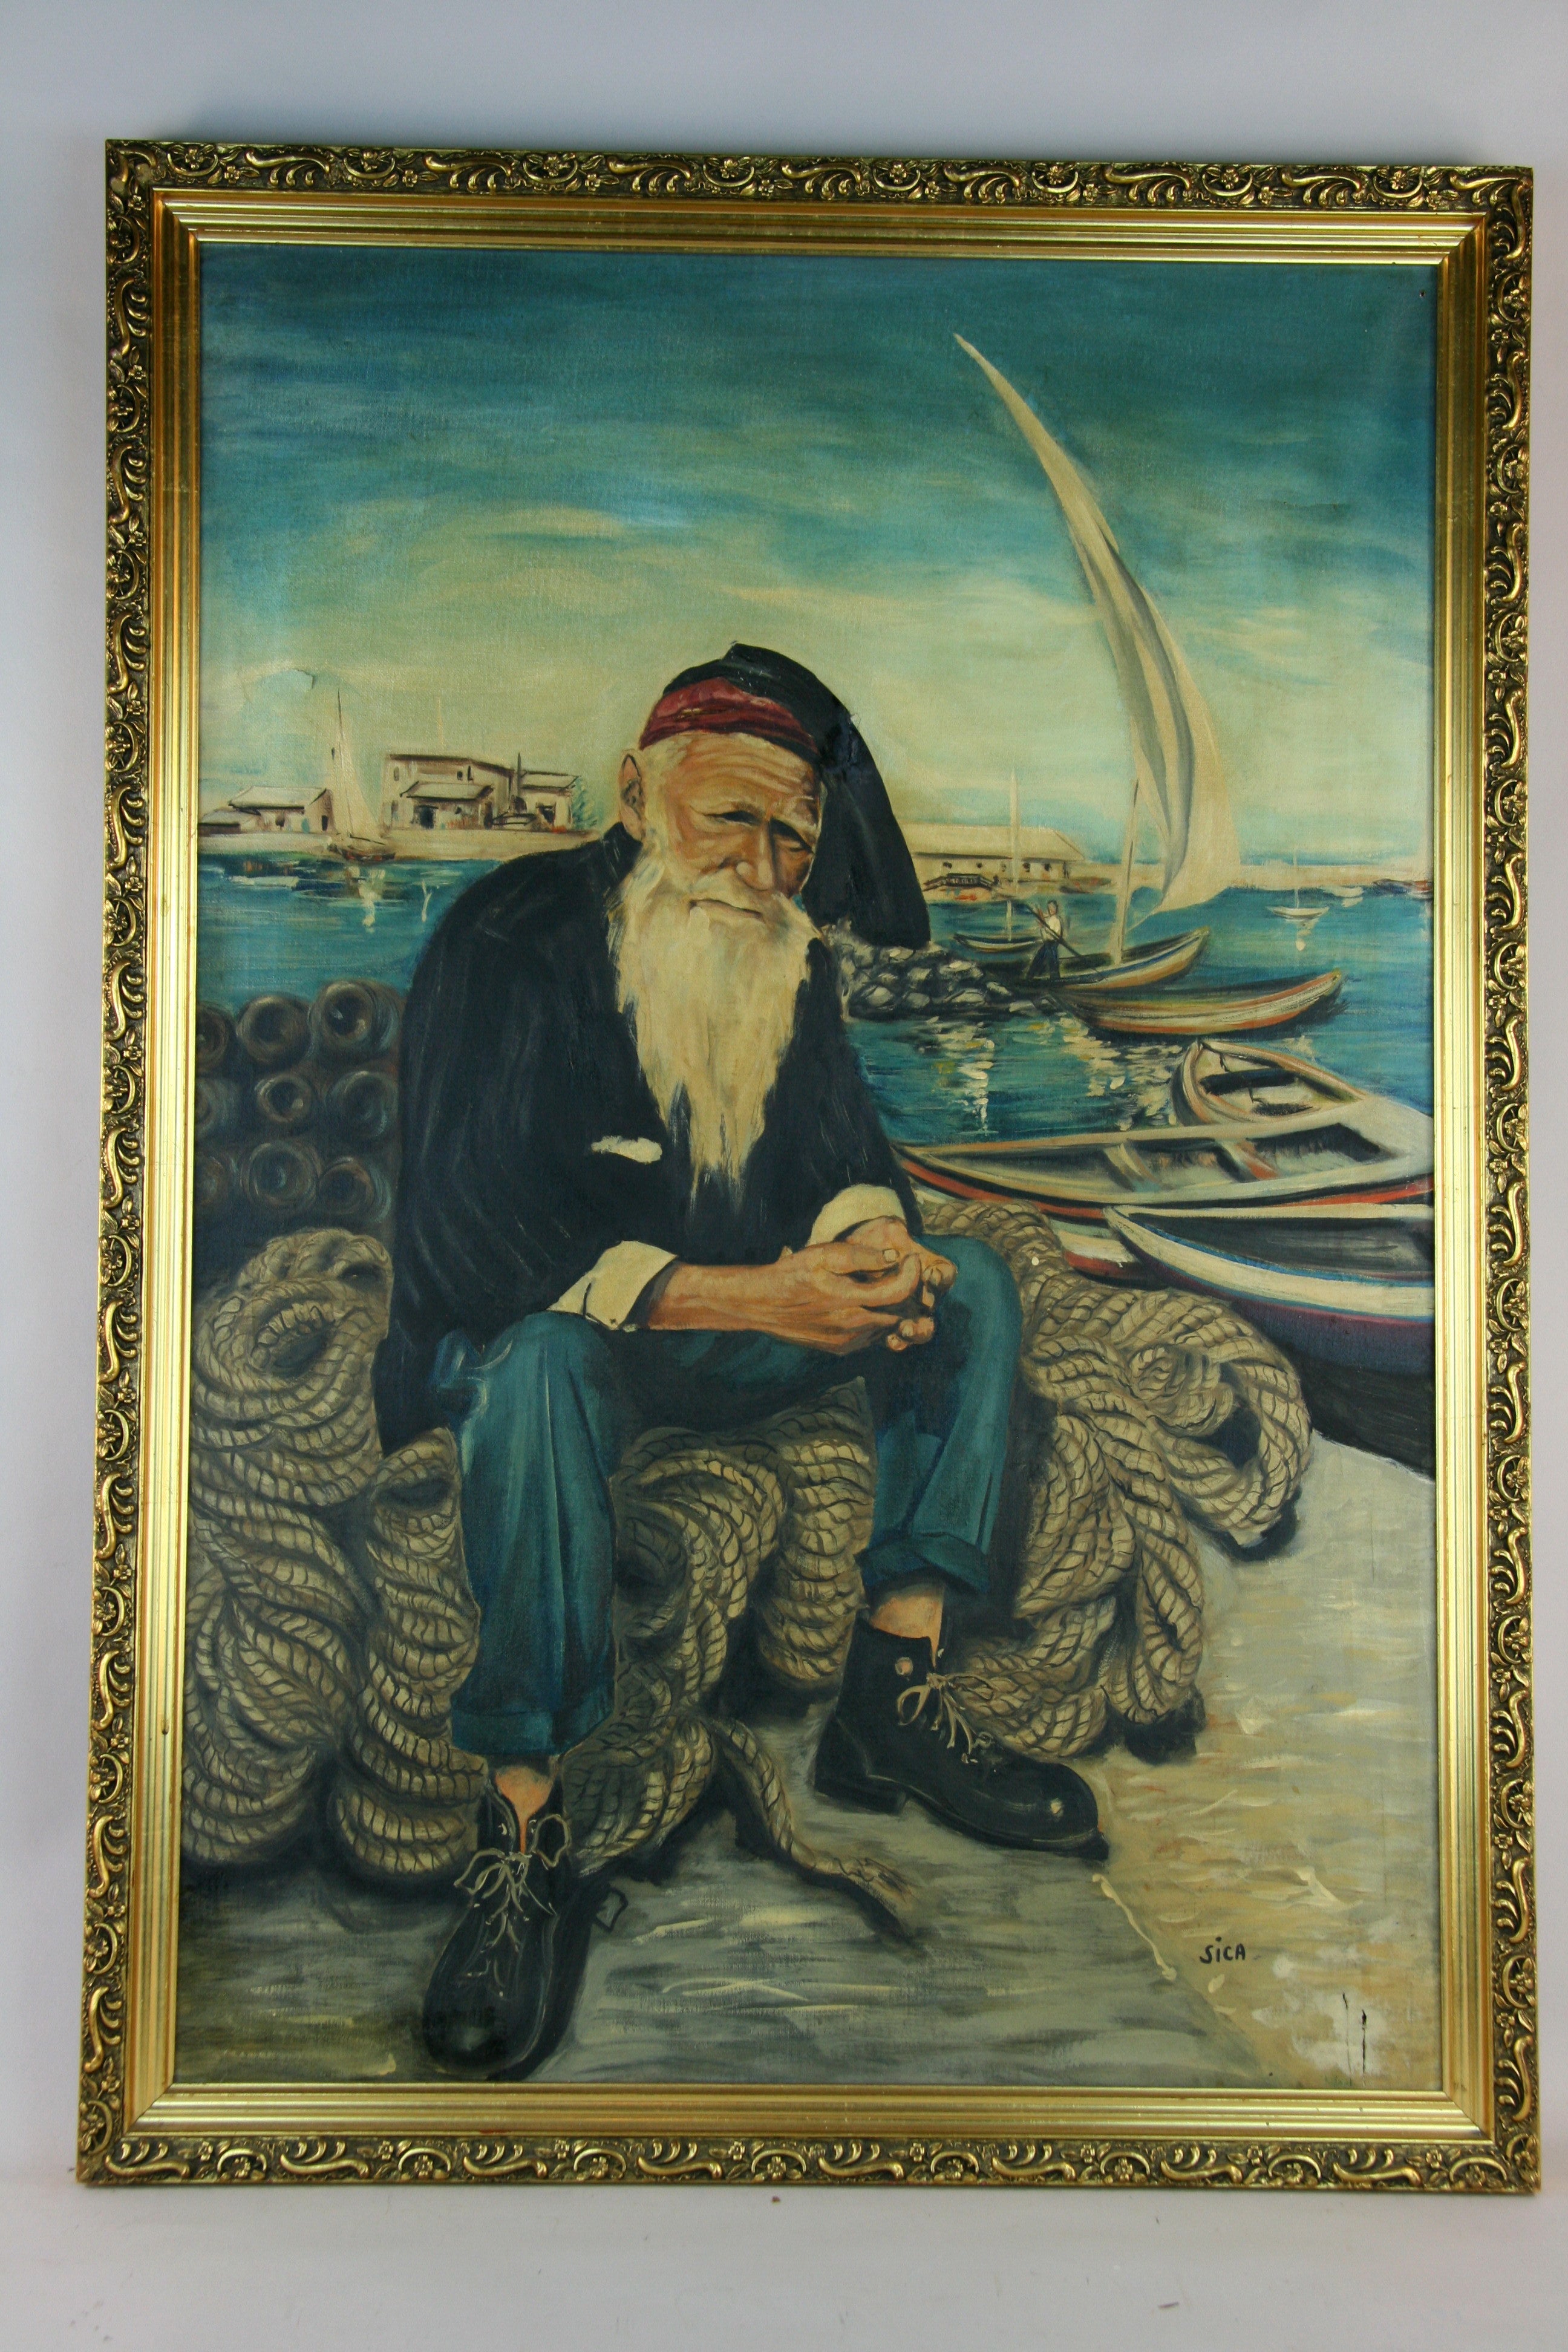 Sicilian Fisherman Oil Painting